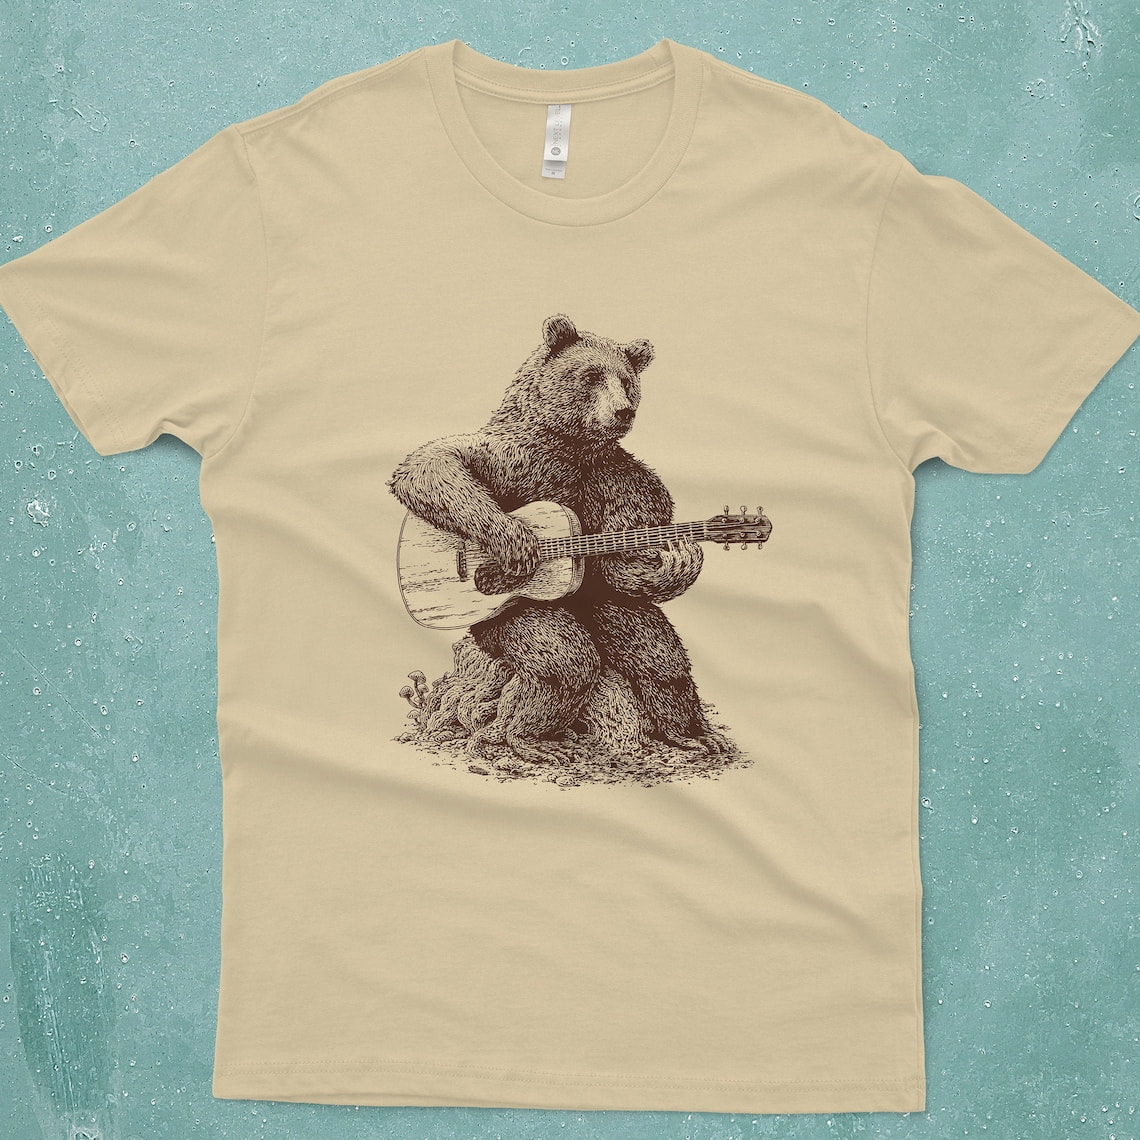 Bear T-Shirt Gift - Bear Playing Guitar Shirt